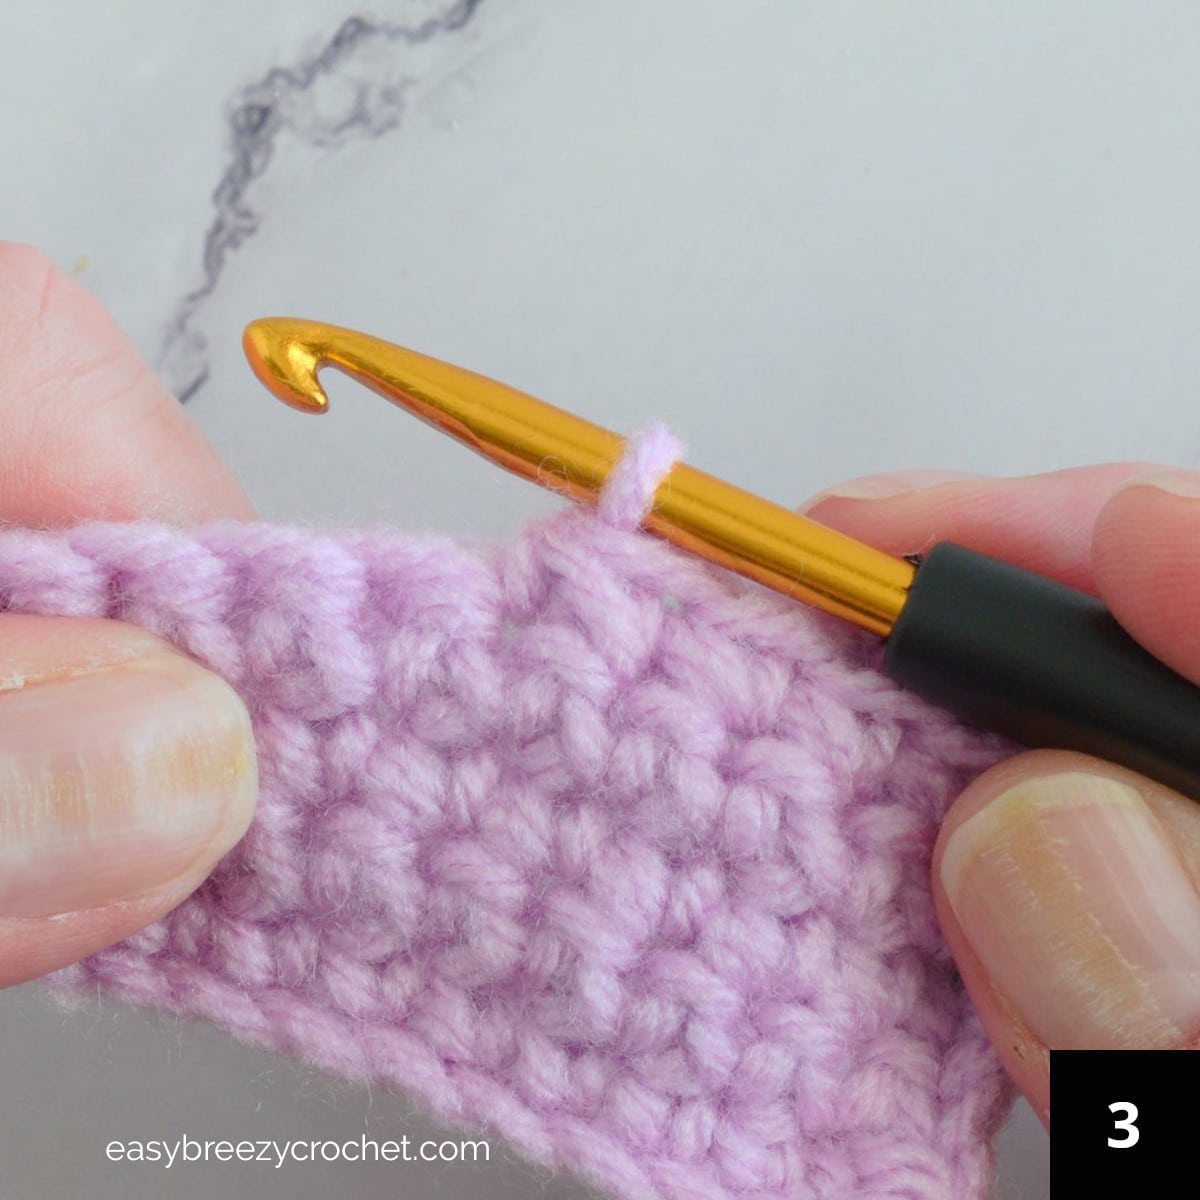 Step three of how to make a single crochet decrease.